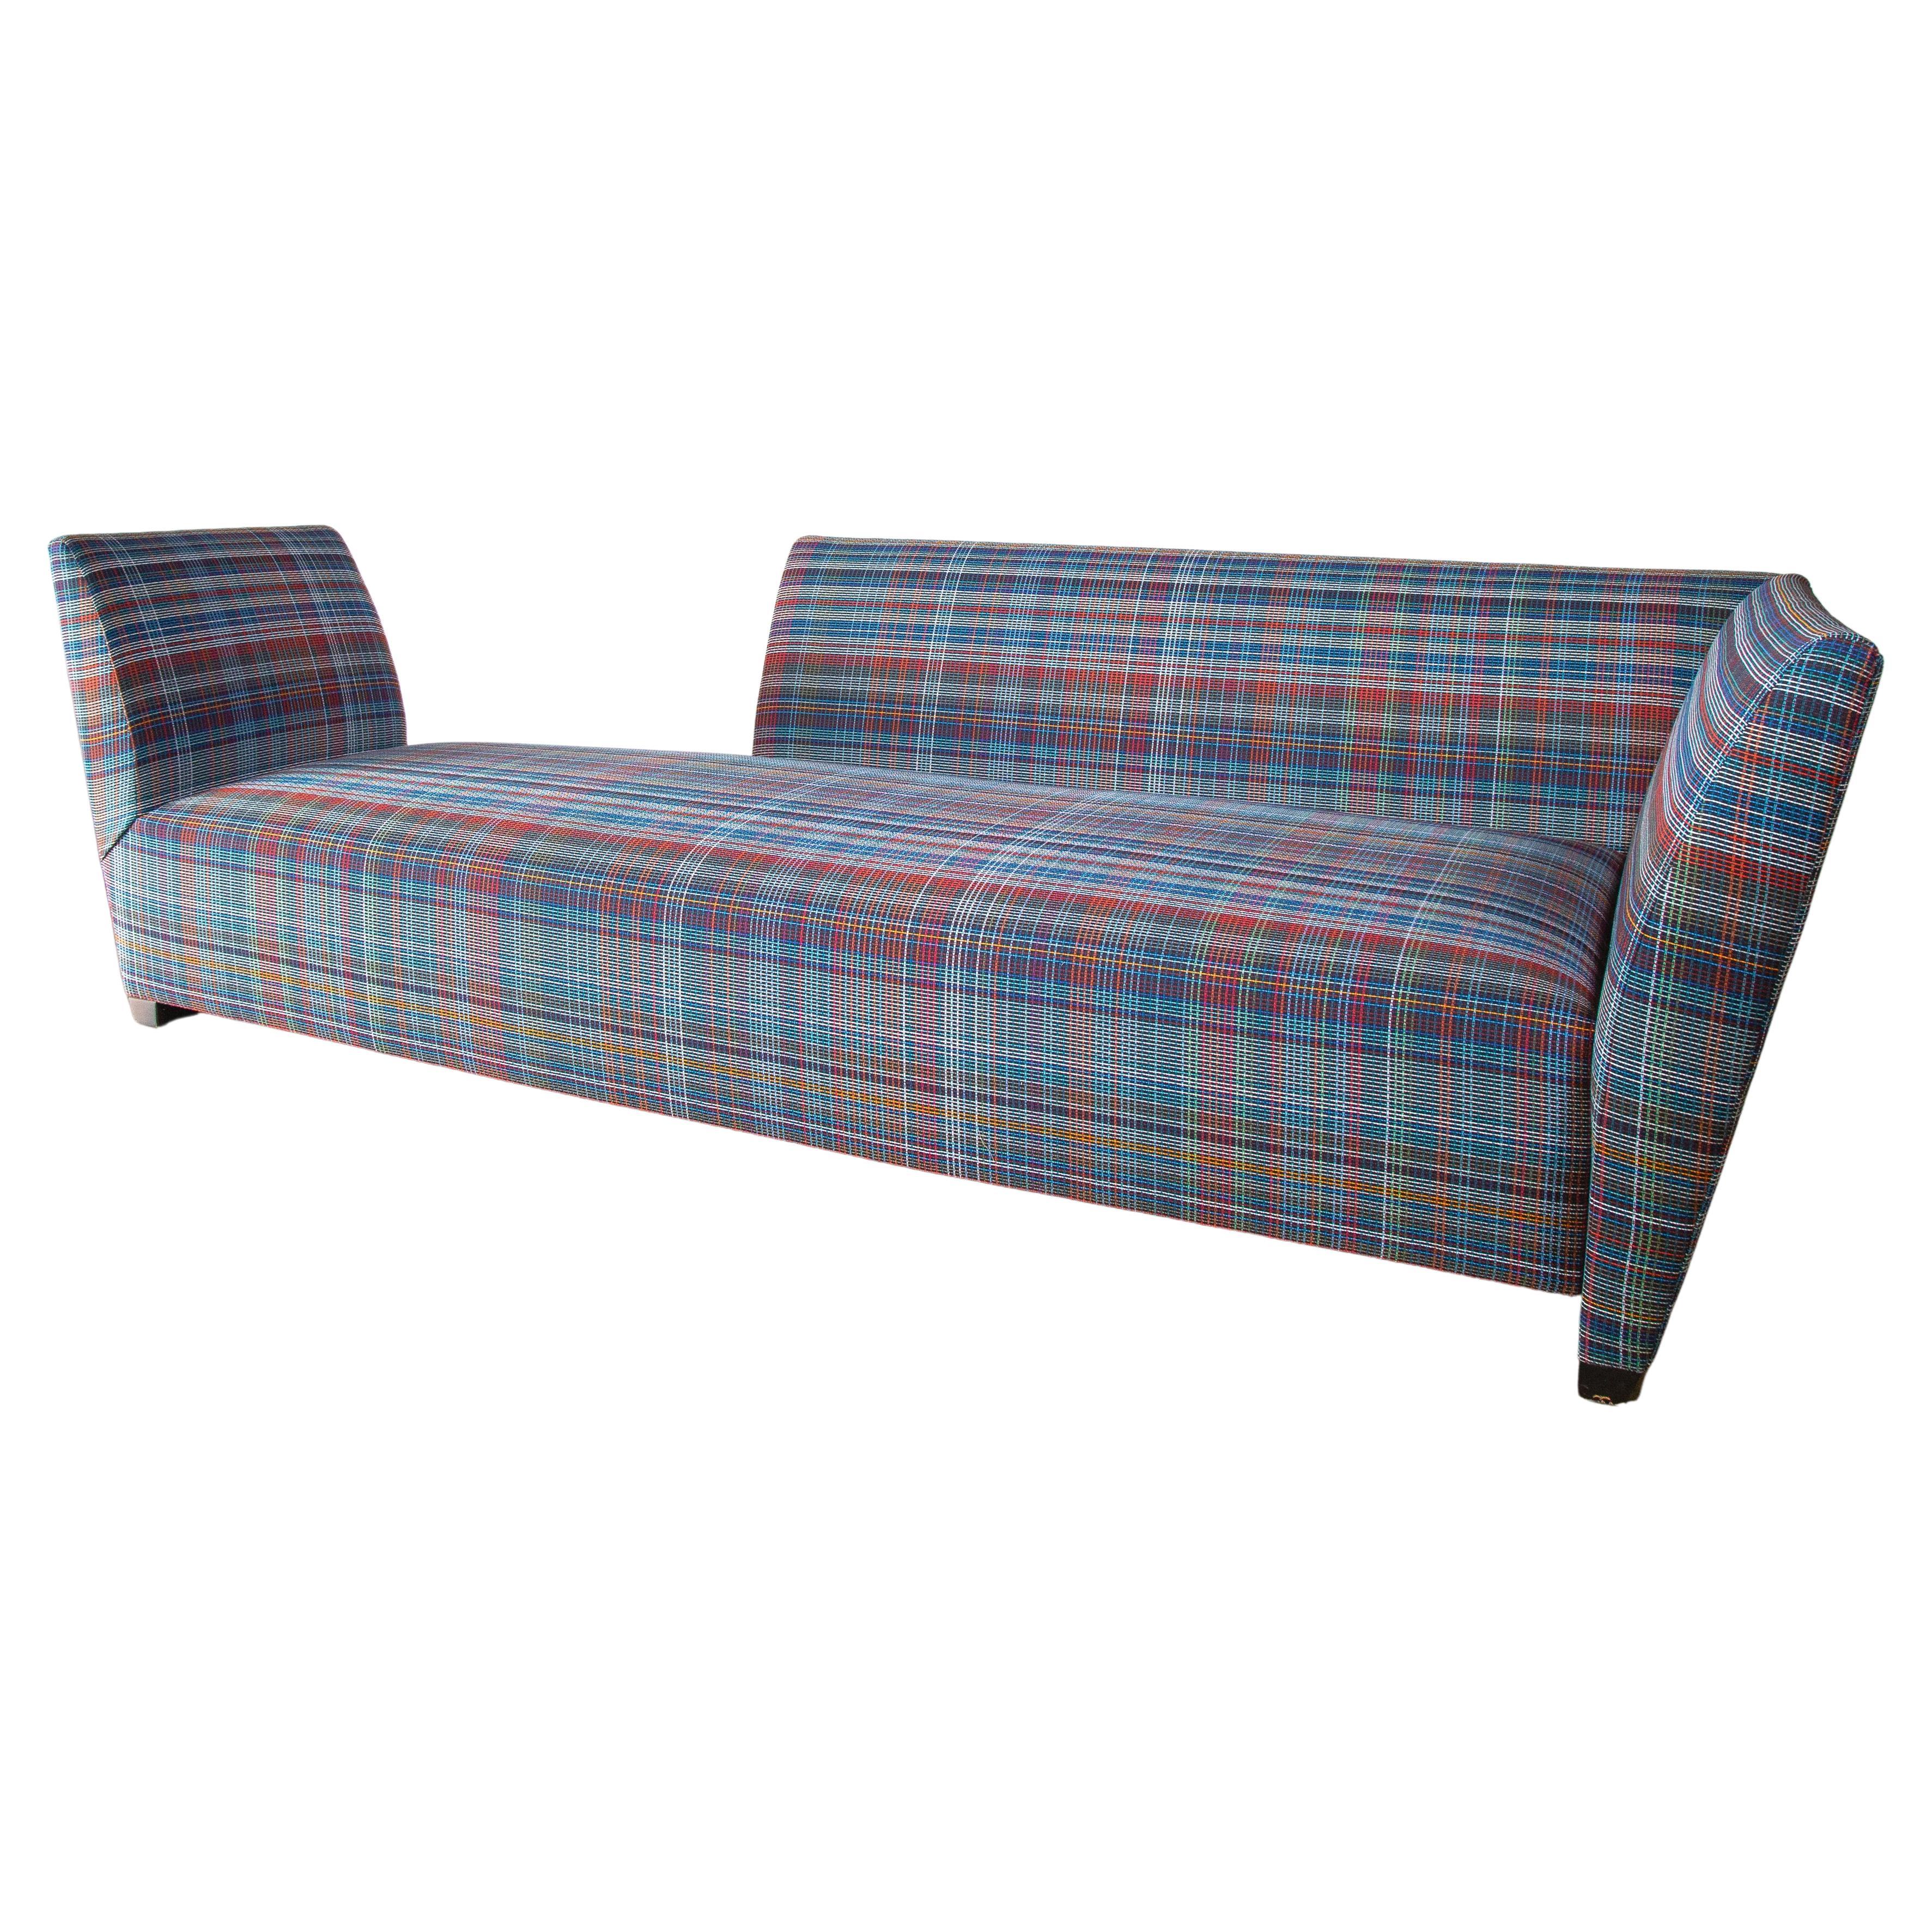 Joe D'Urso Island Sofa for Donghia Knoll Plaidtastic Fabric tete-a-tete chaise For Sale